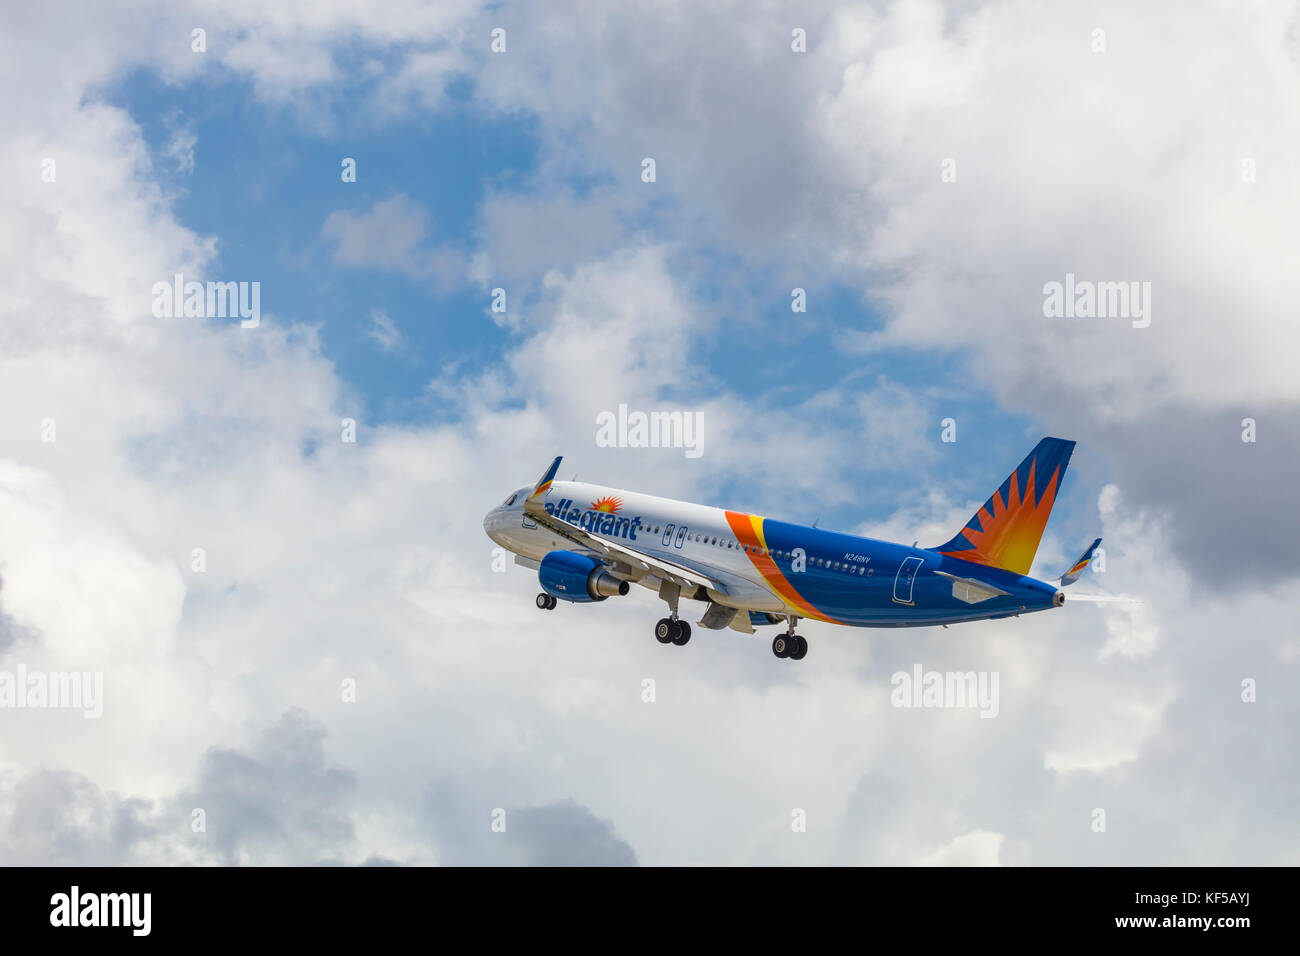 Allegiant commercial passenger airliner taking off at Punta Gorda Florida airport Stock Photo